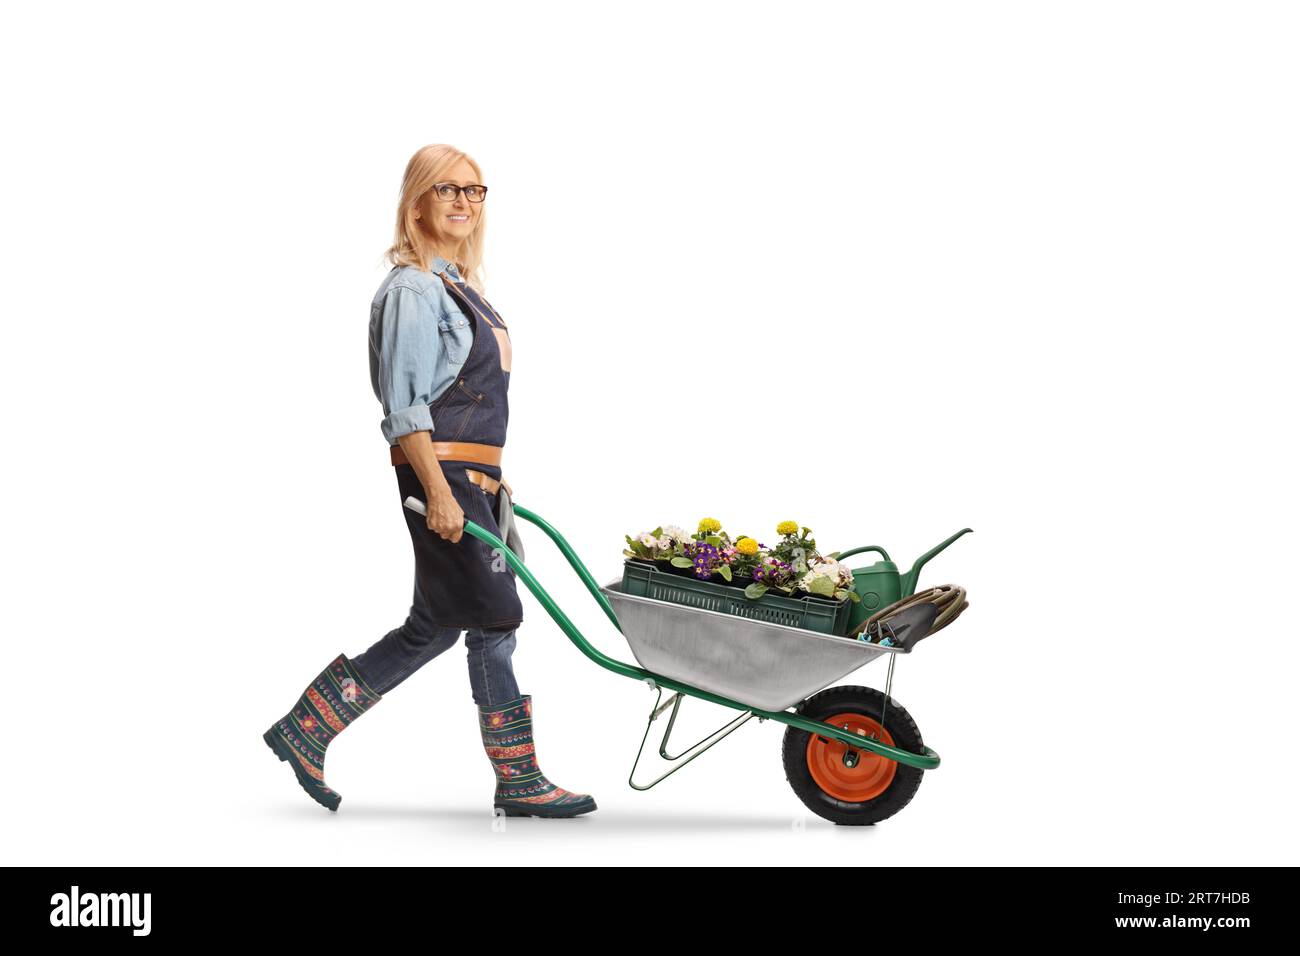 Full length profile shot of a female gardener pushing a wheelbarrow full of flowers solated on white background Stock Photo